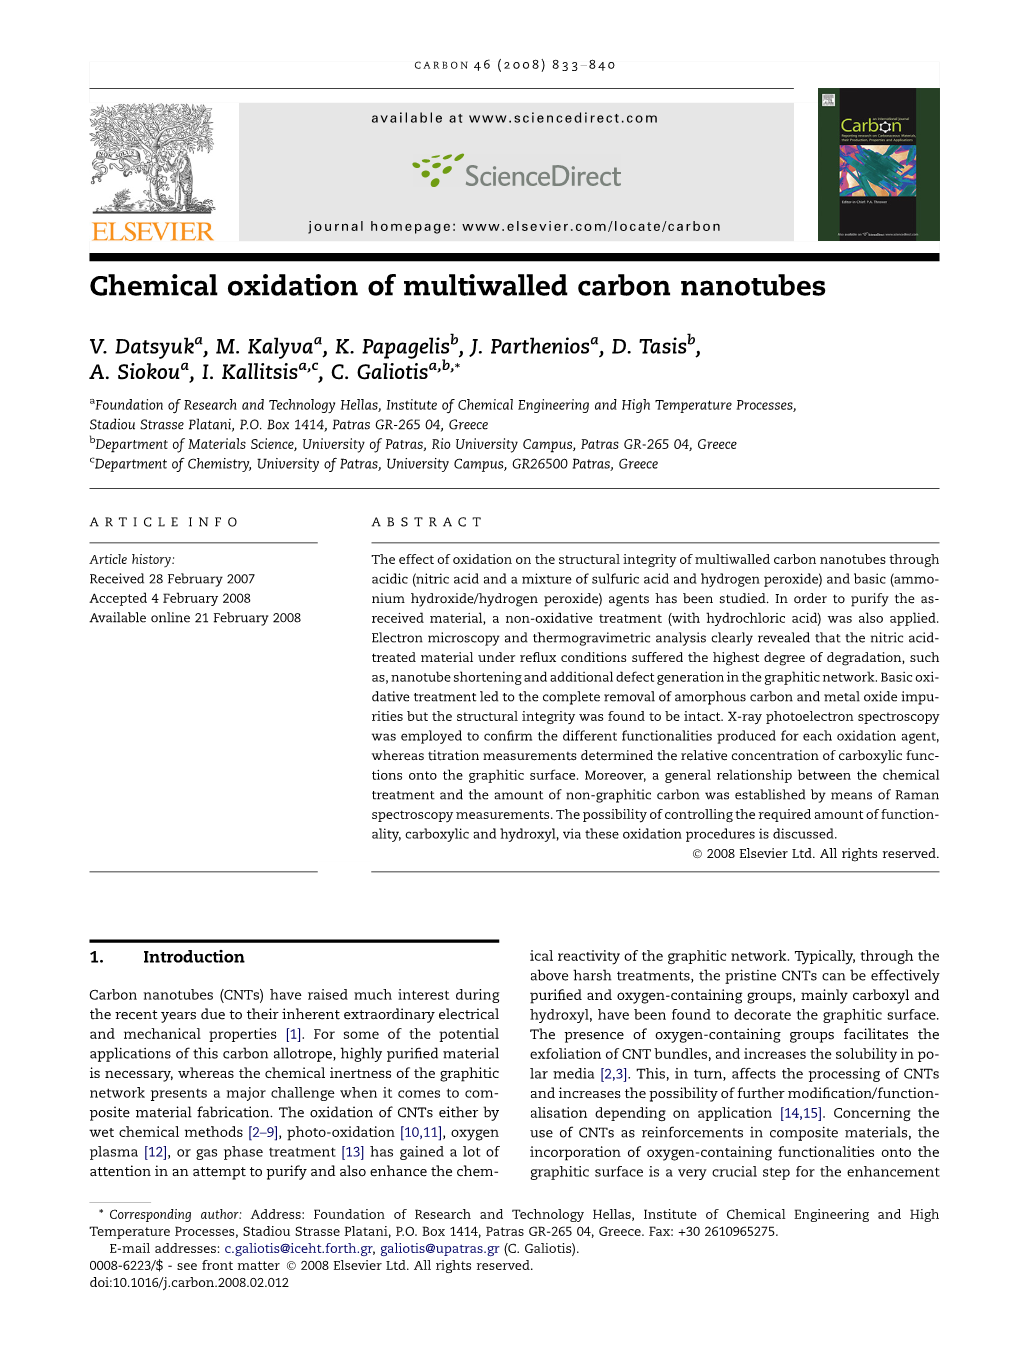 Chemical Oxidation of Multiwalled Carbon Nanotubes